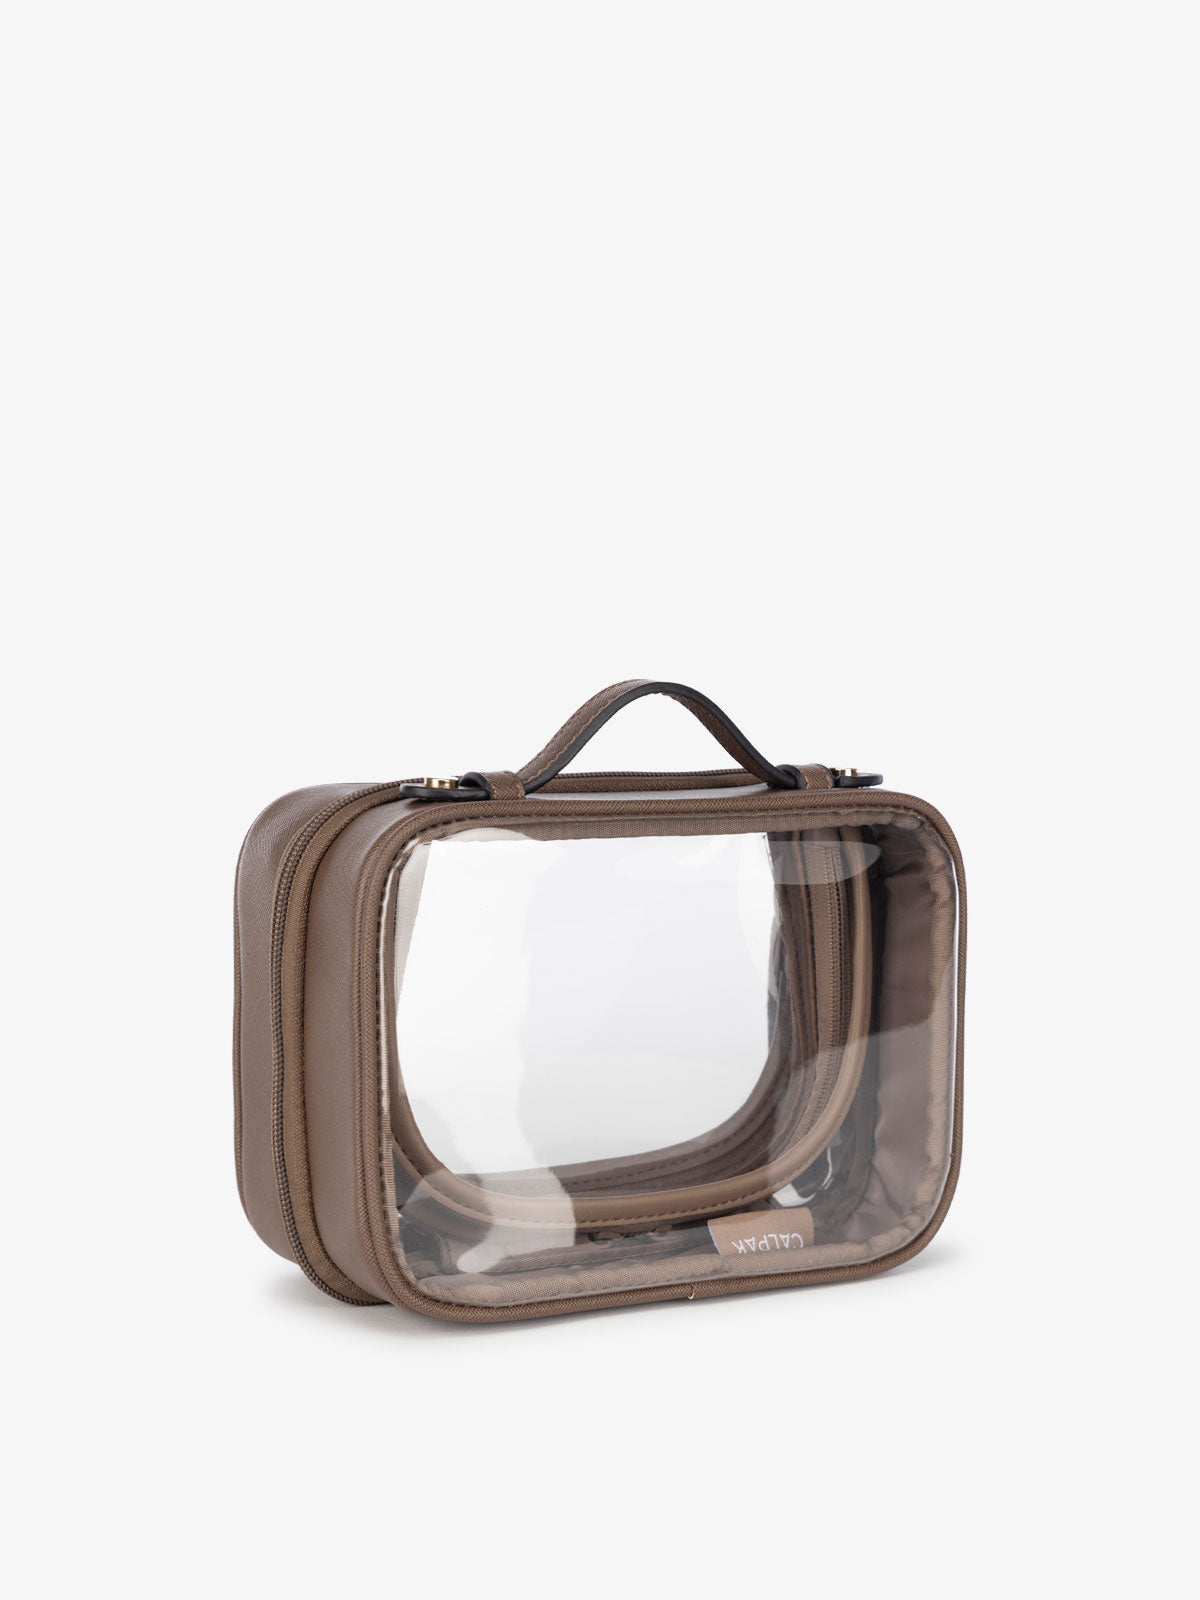 CALPAK mini clear travel cosmetics bag with handles